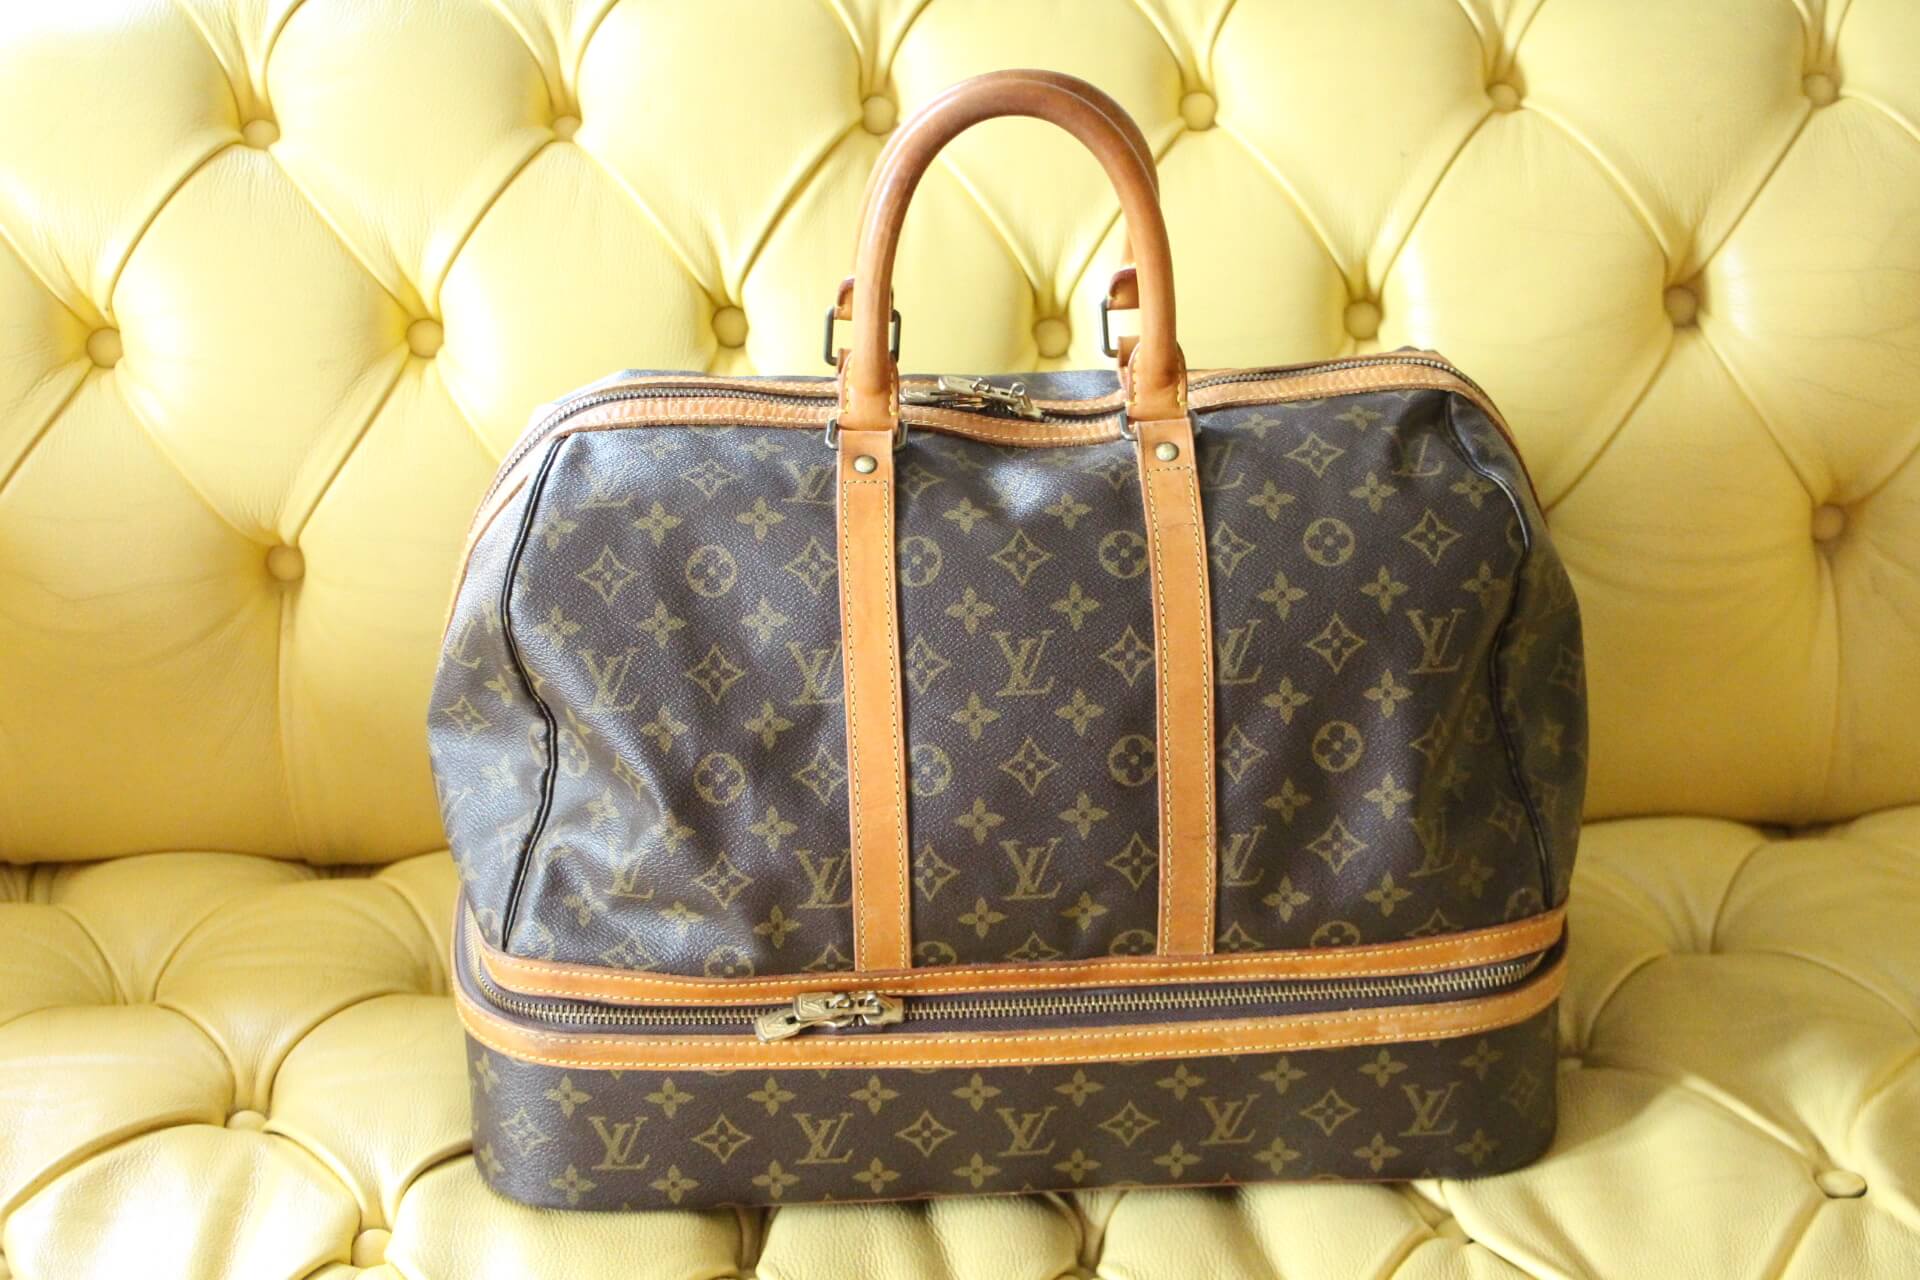 Past auction: Two Louis Vuitton travel bags 1970s